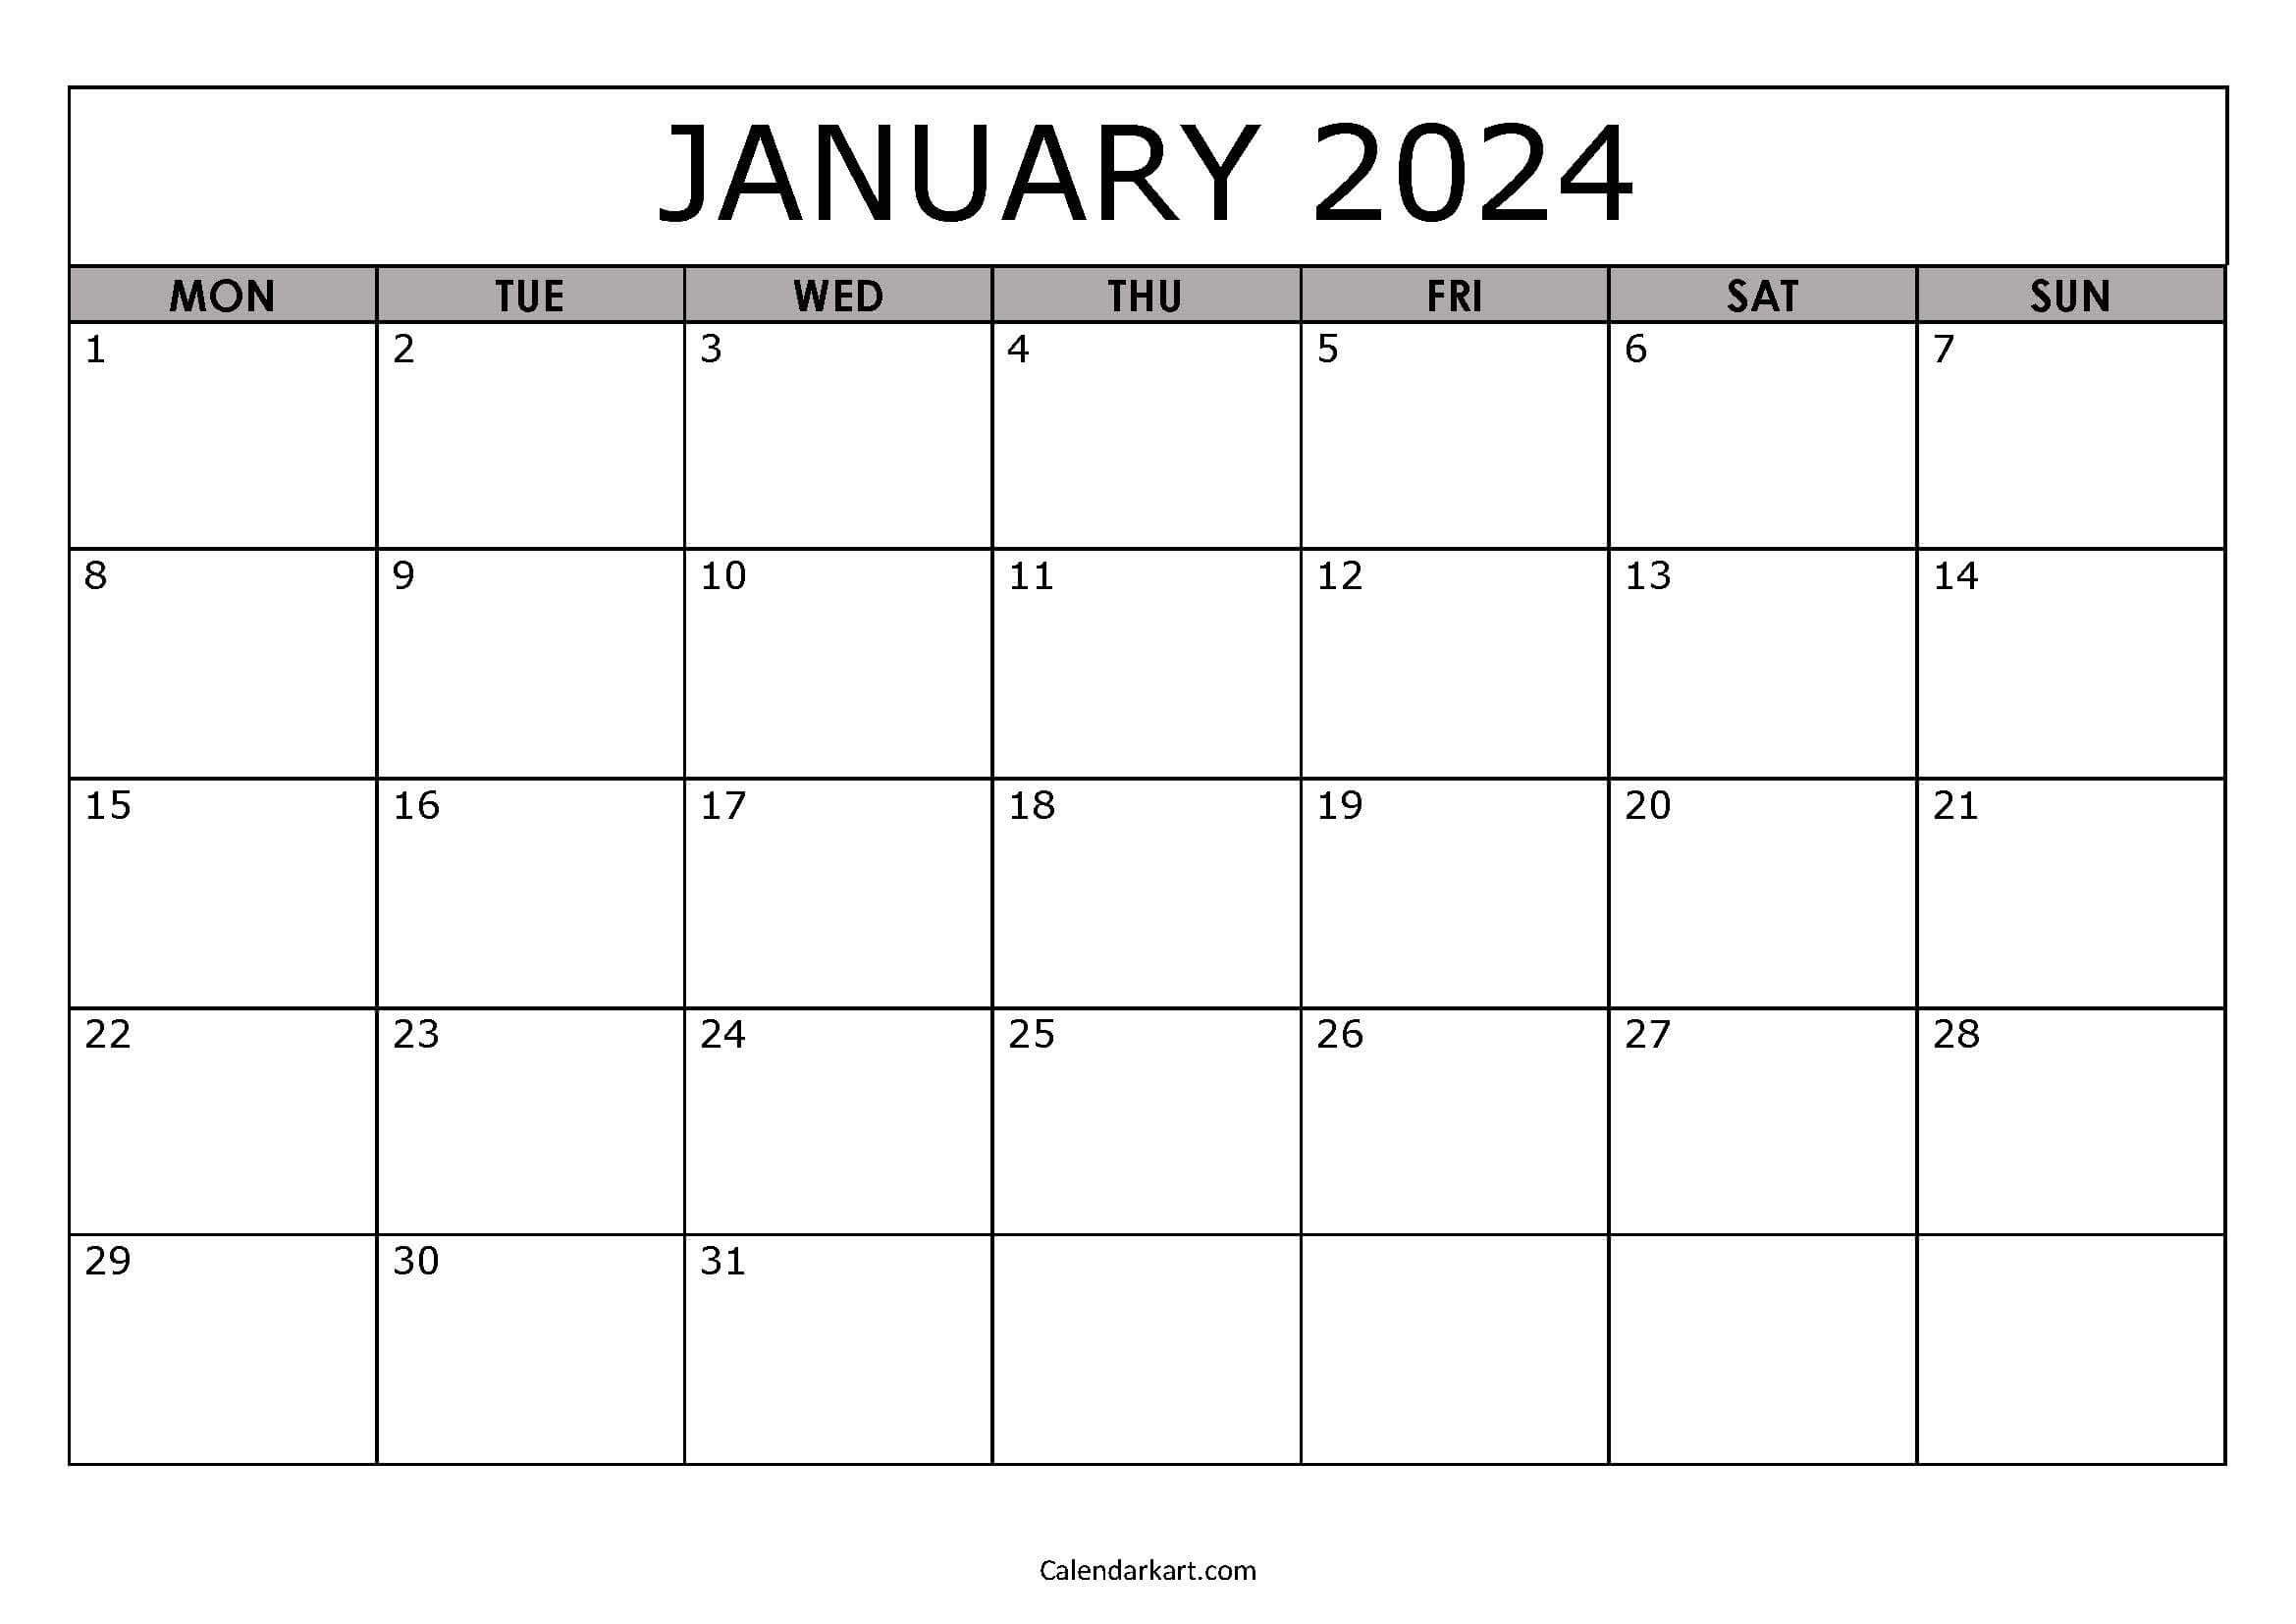 Free Printable January 2024 Calendars - Calendarkart | Free Printable Calendar 2024 Monday Start